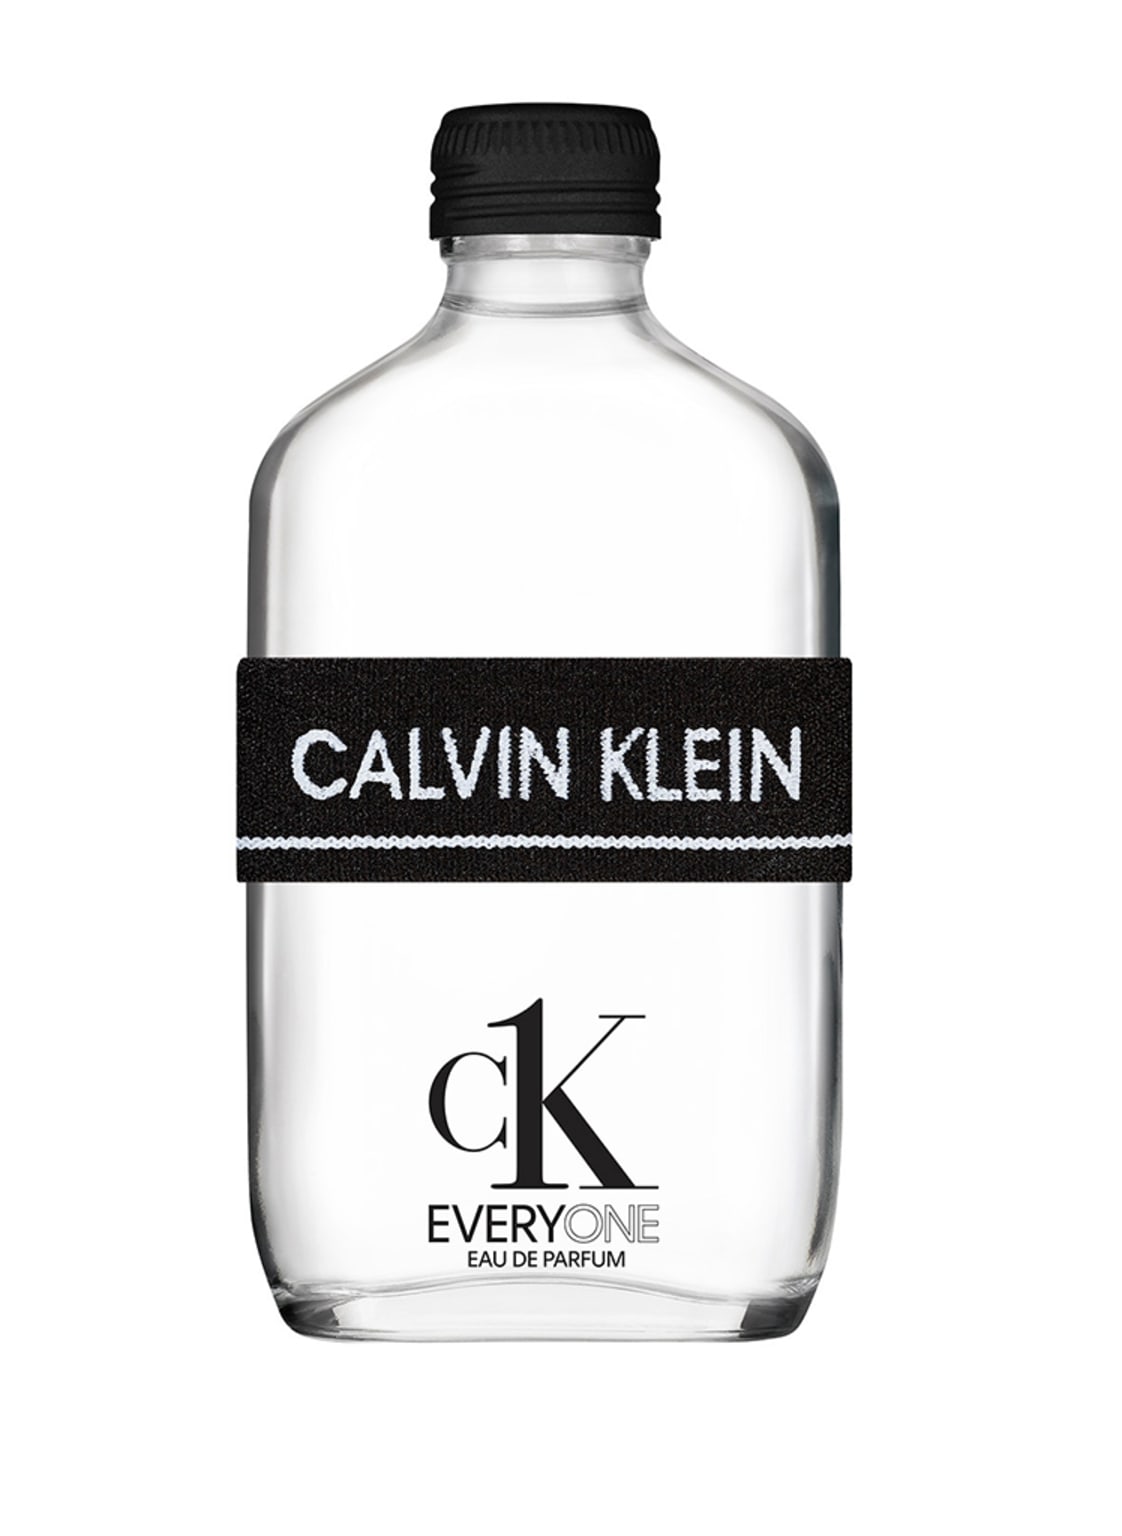 Calvin Klein Ck Everyone Eau de Parfum 50 ml von Calvin Klein